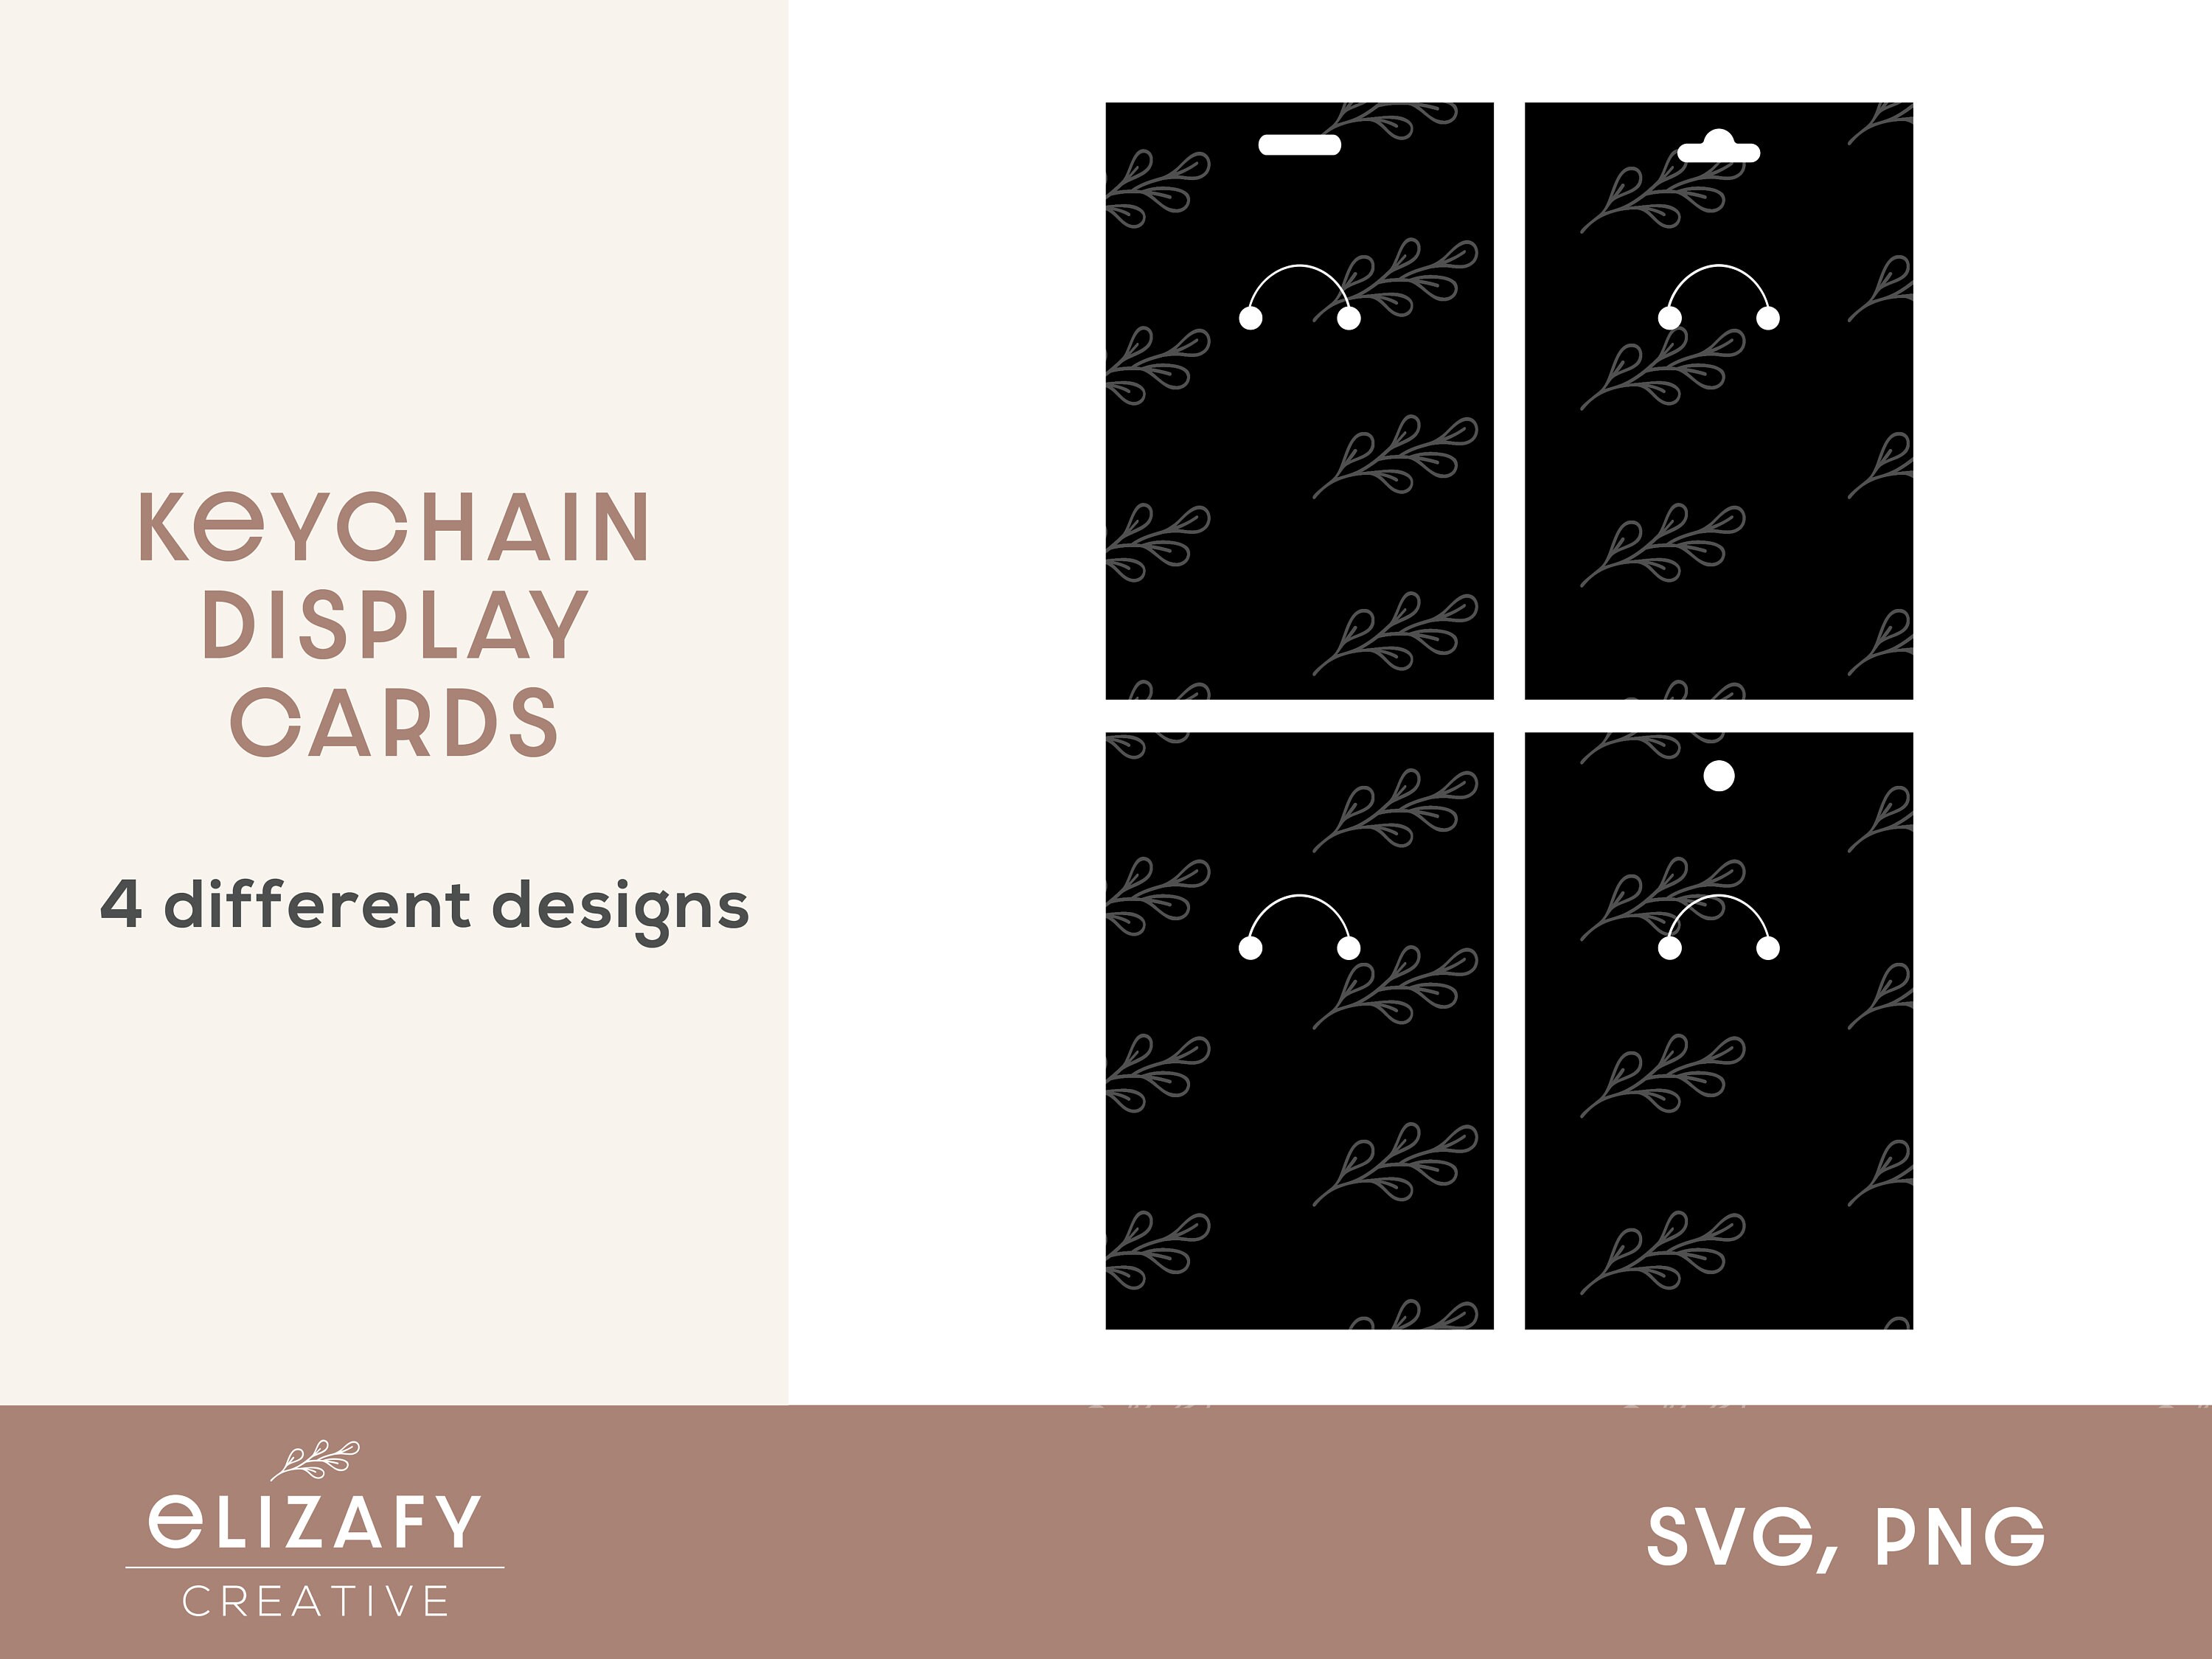 Keyring Display Card svg, Keychain Card Holder svg (1427814)